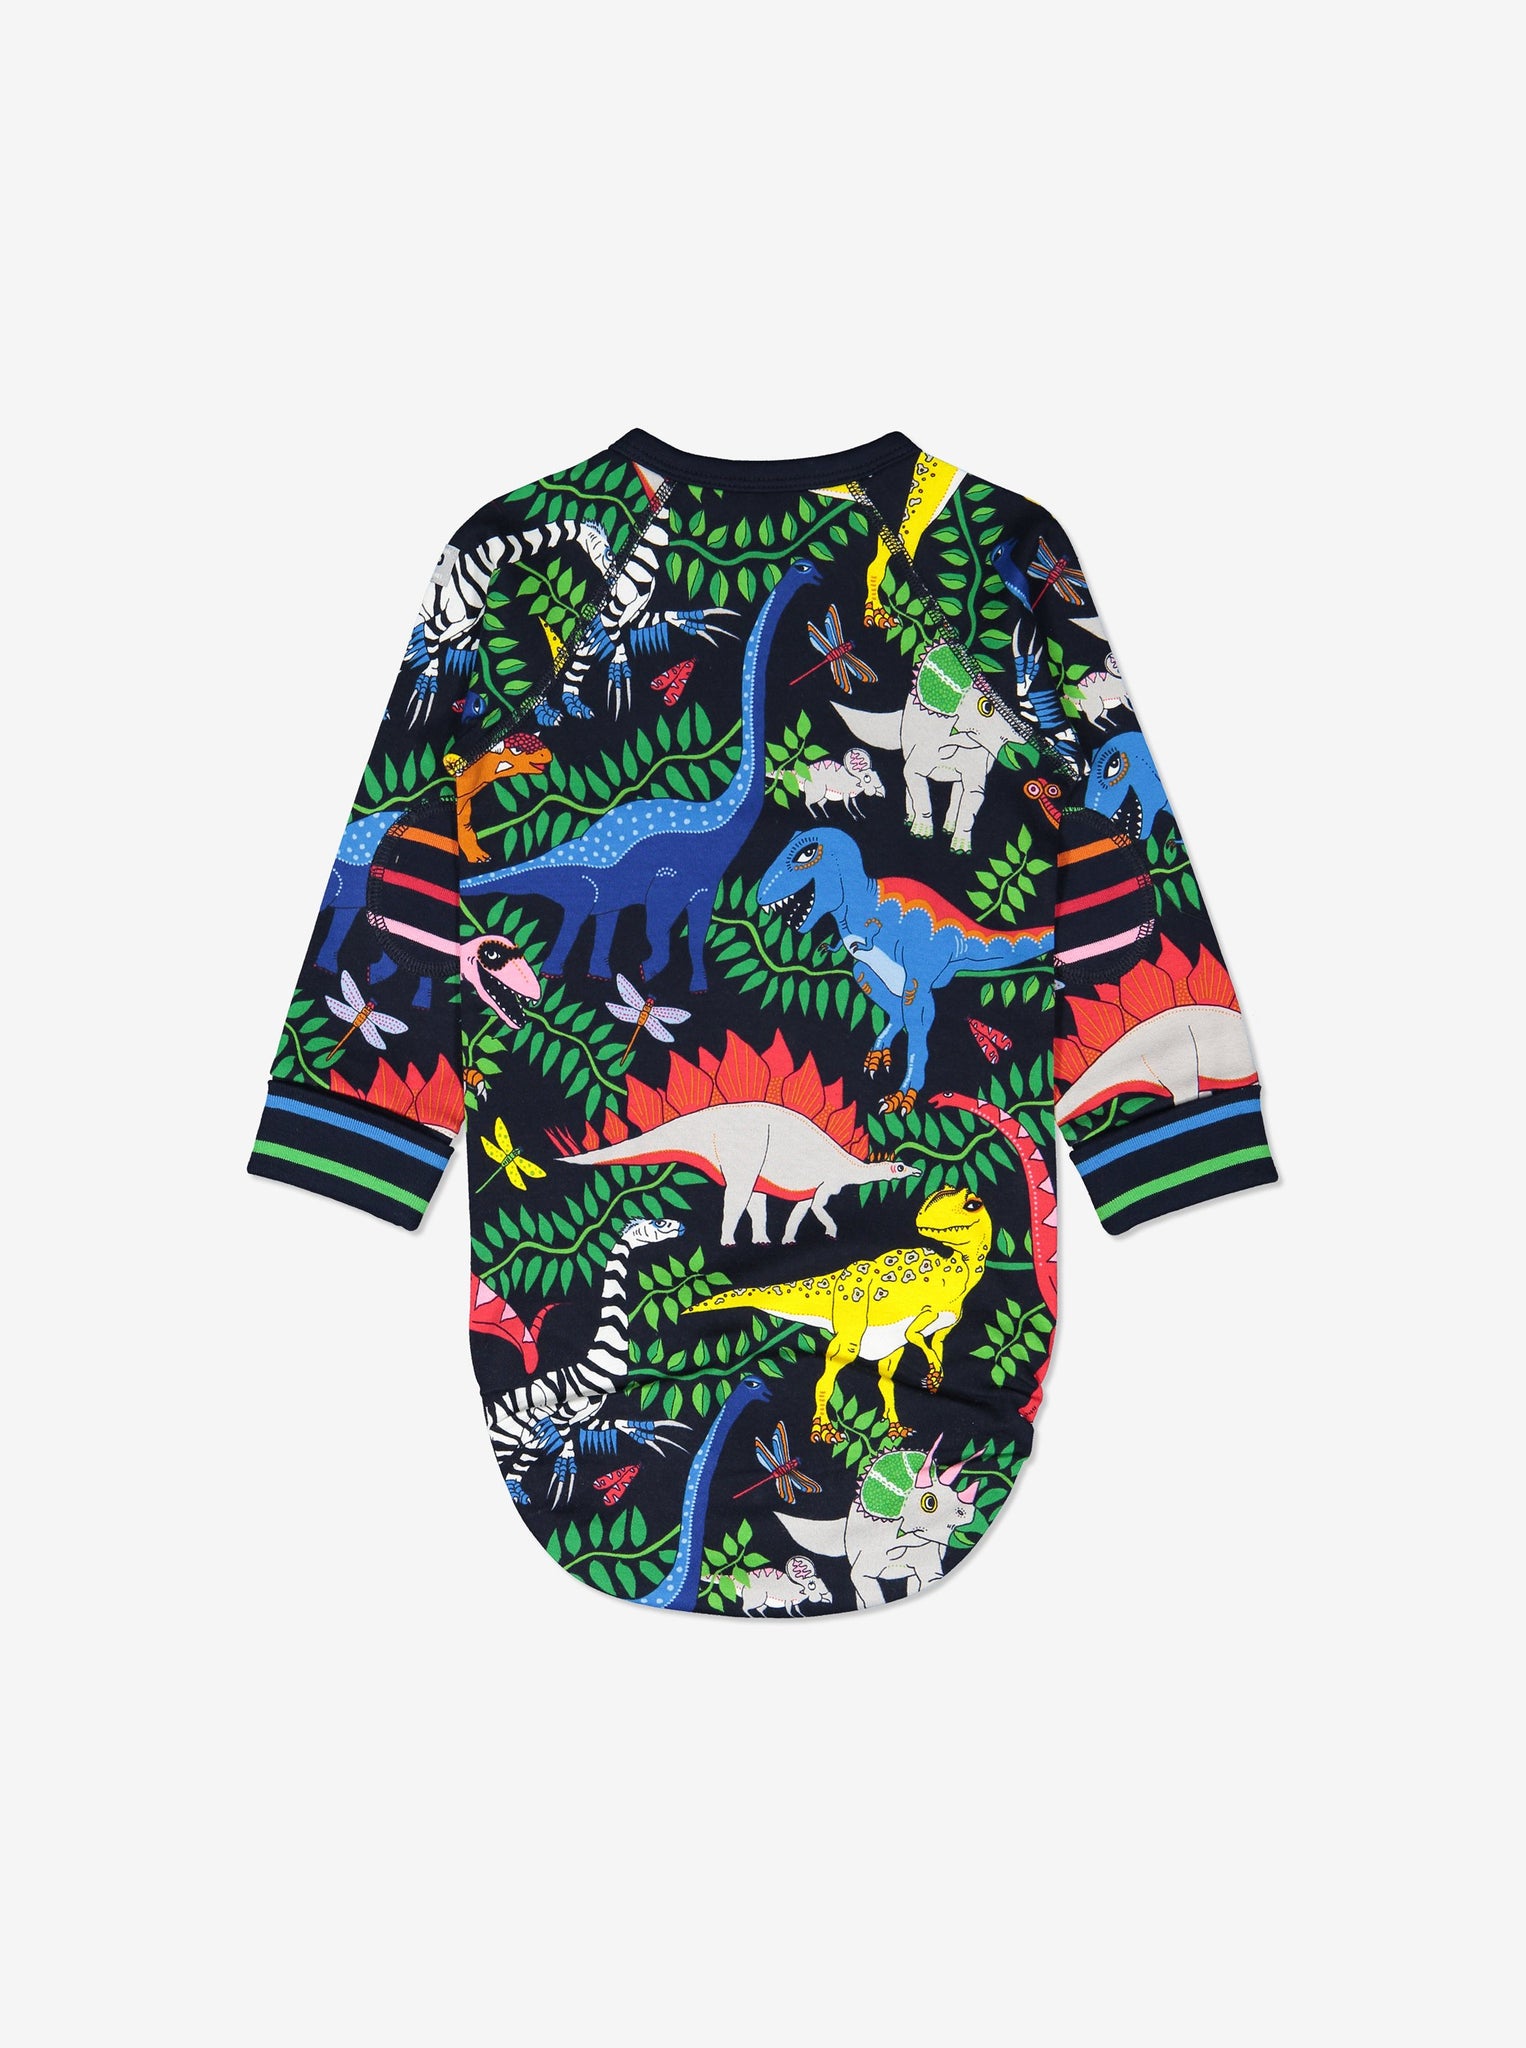 Dinosaur Print Babygrows, Ethical Baby Clothes| Polarn O. Pyret UK